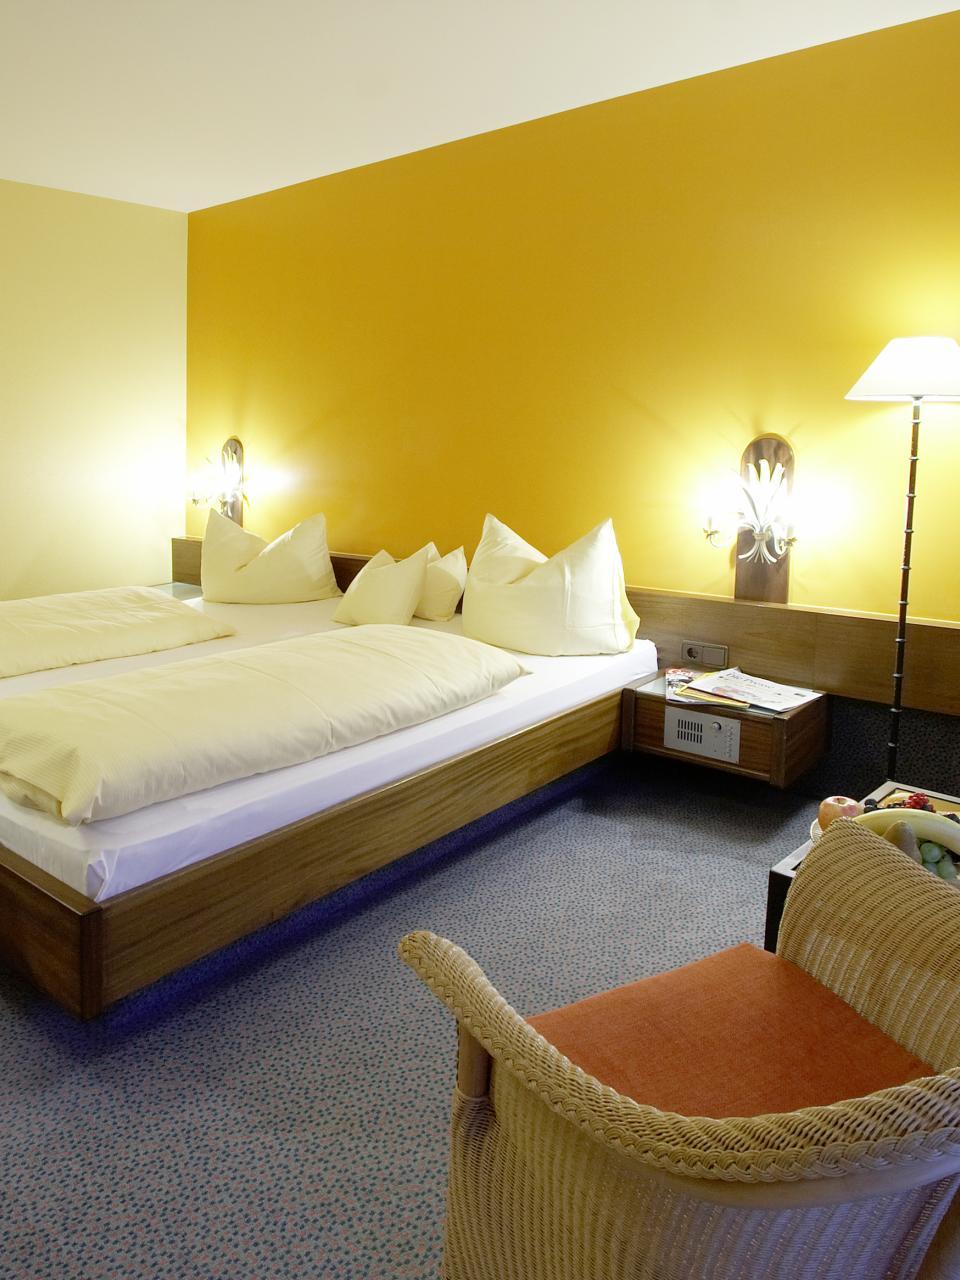 Doppelzimmer im Hotel Schiffle in Hohenems